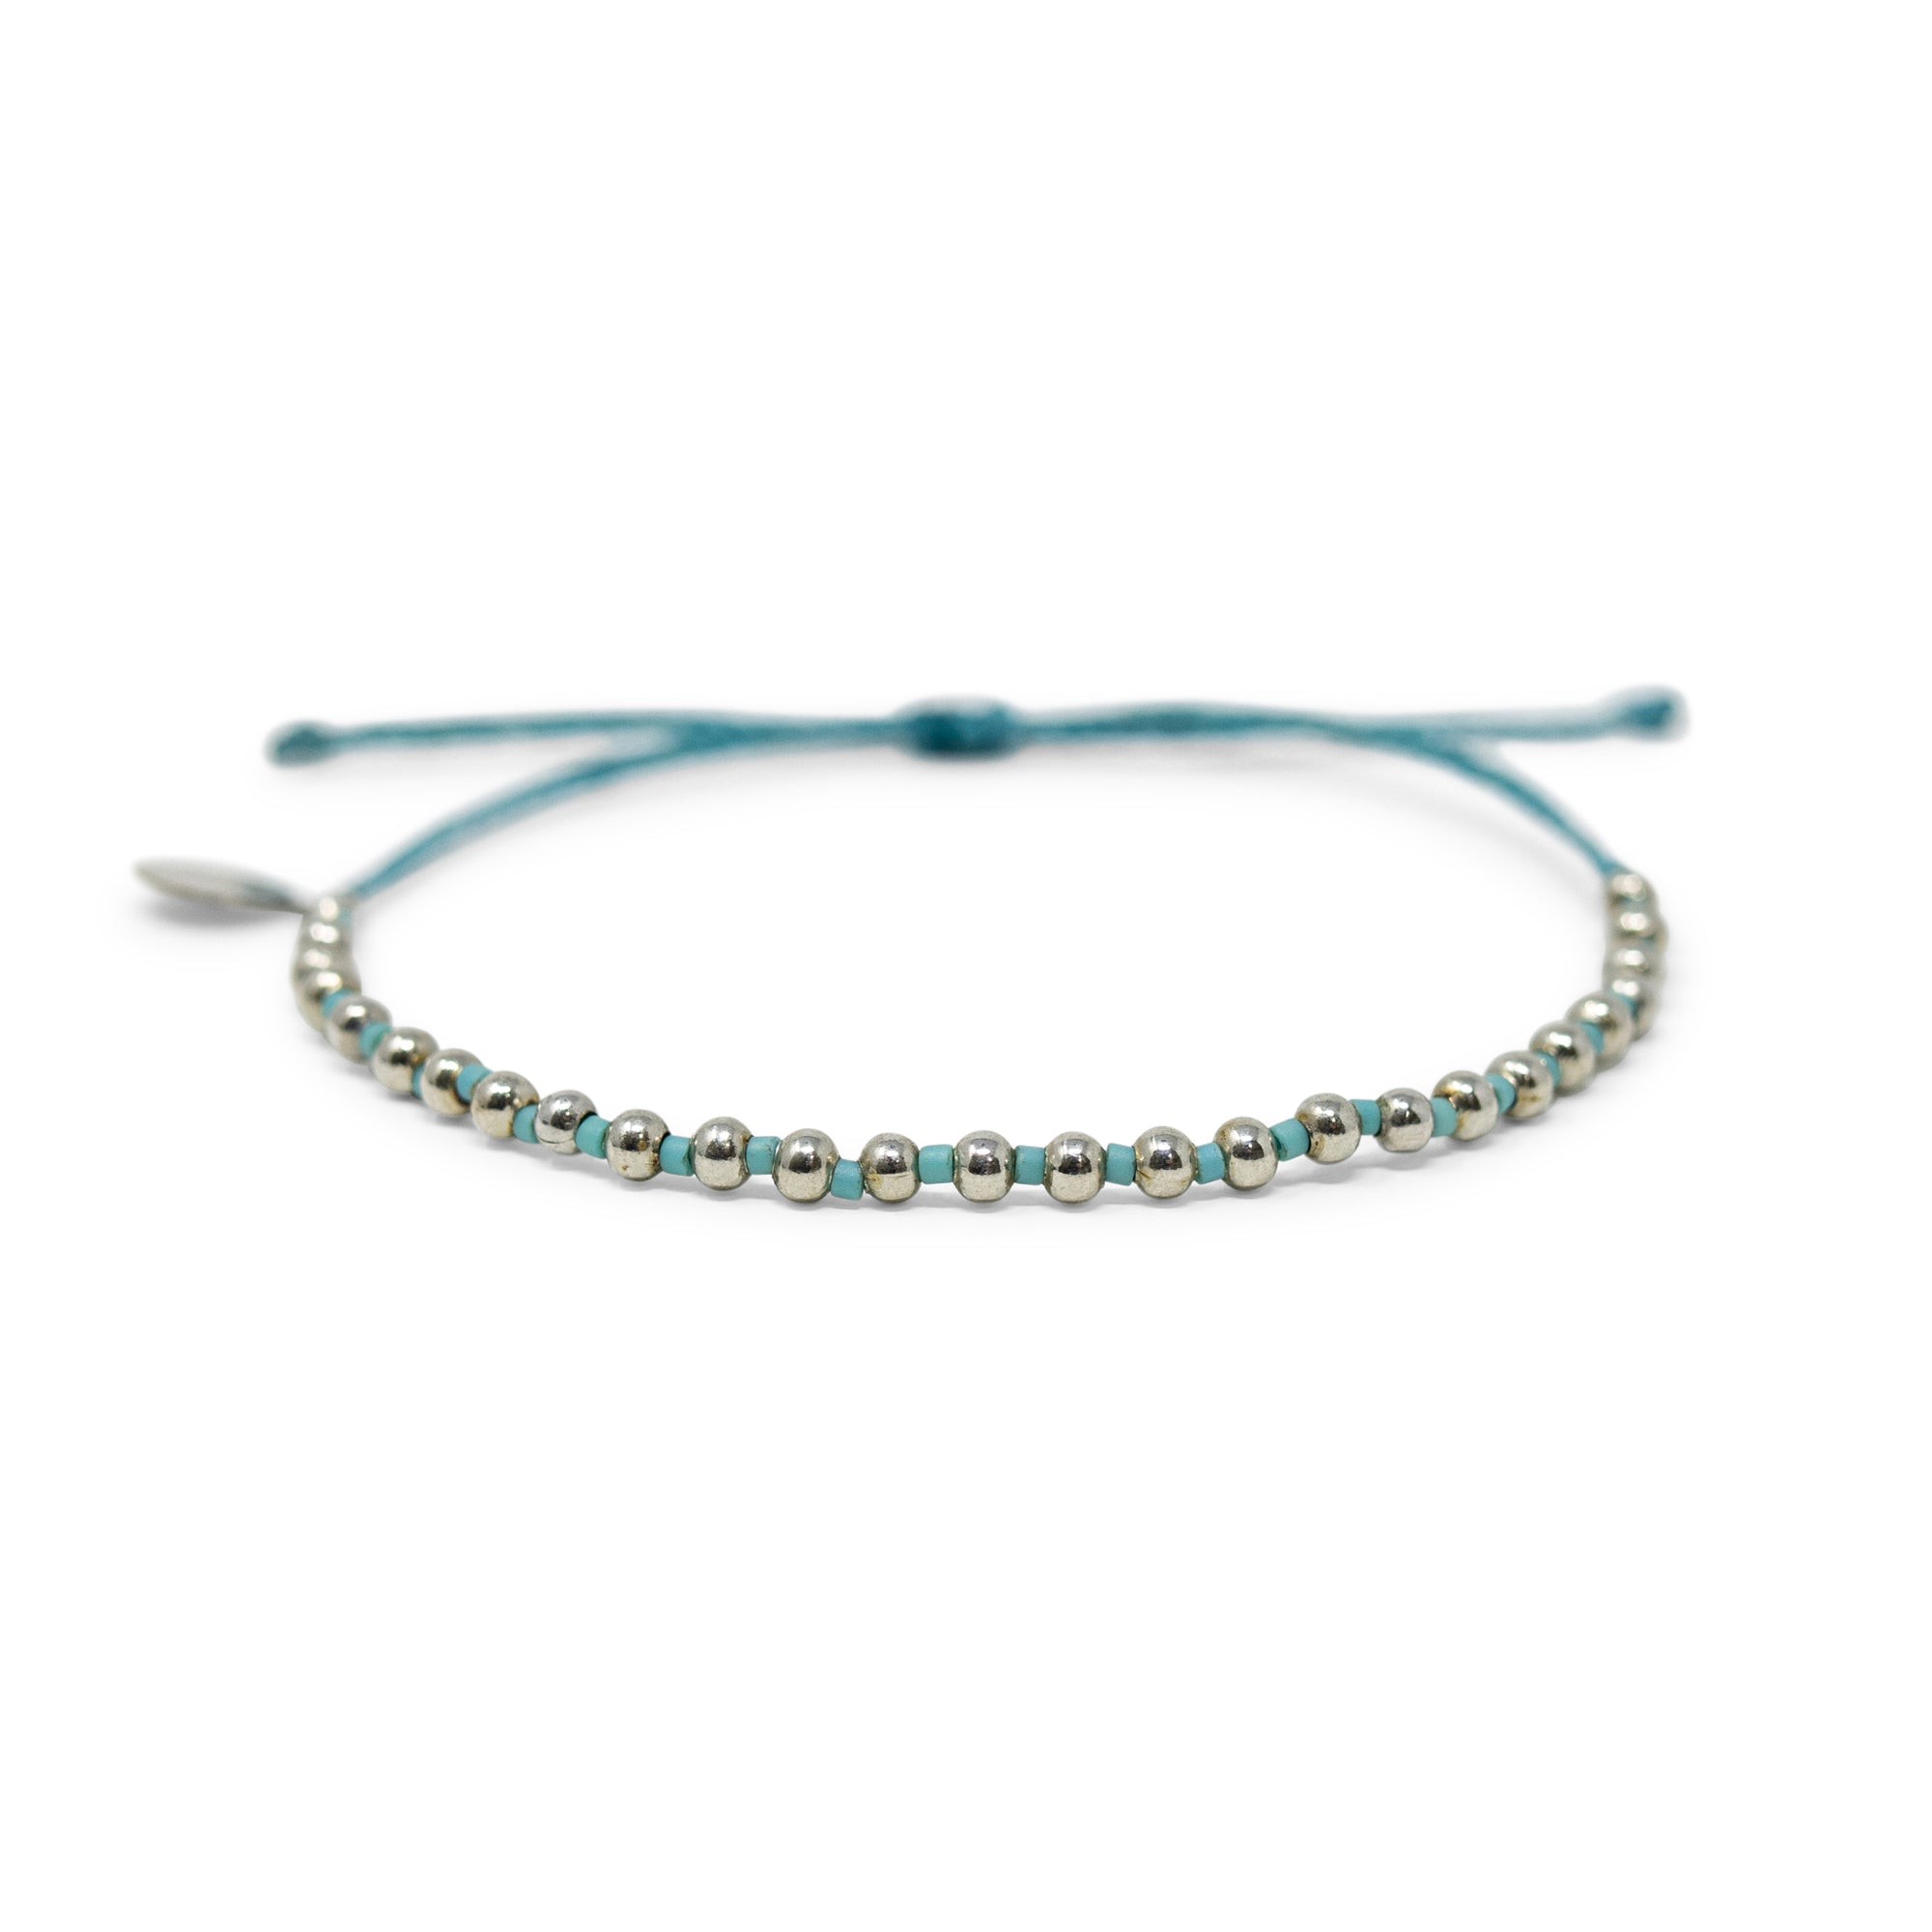 Teal & Silver Bead Alternating Bracelet